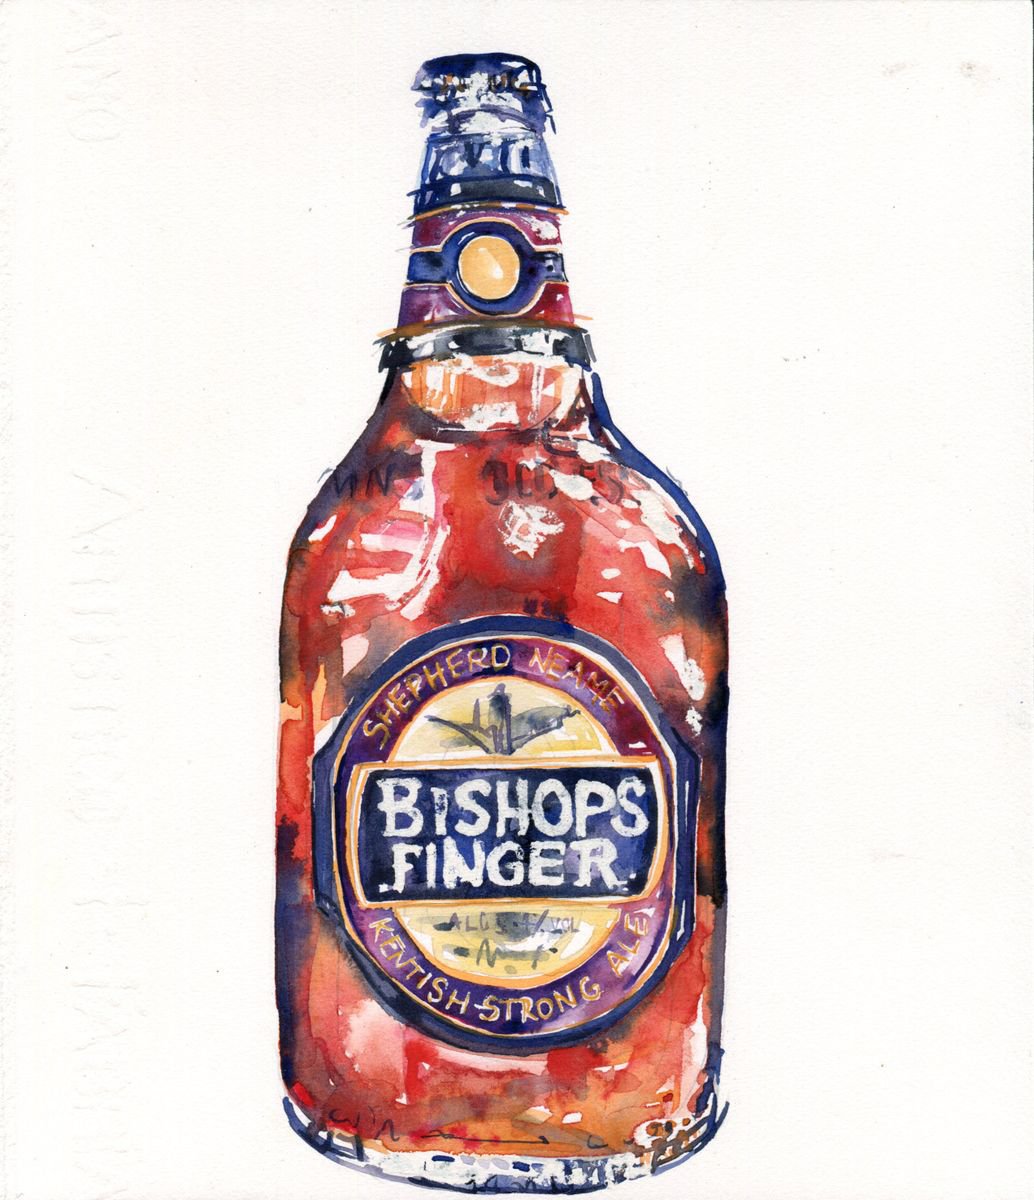 Shepherd Neame’s Bishops Finger Beer Bottle by Hannah Clark